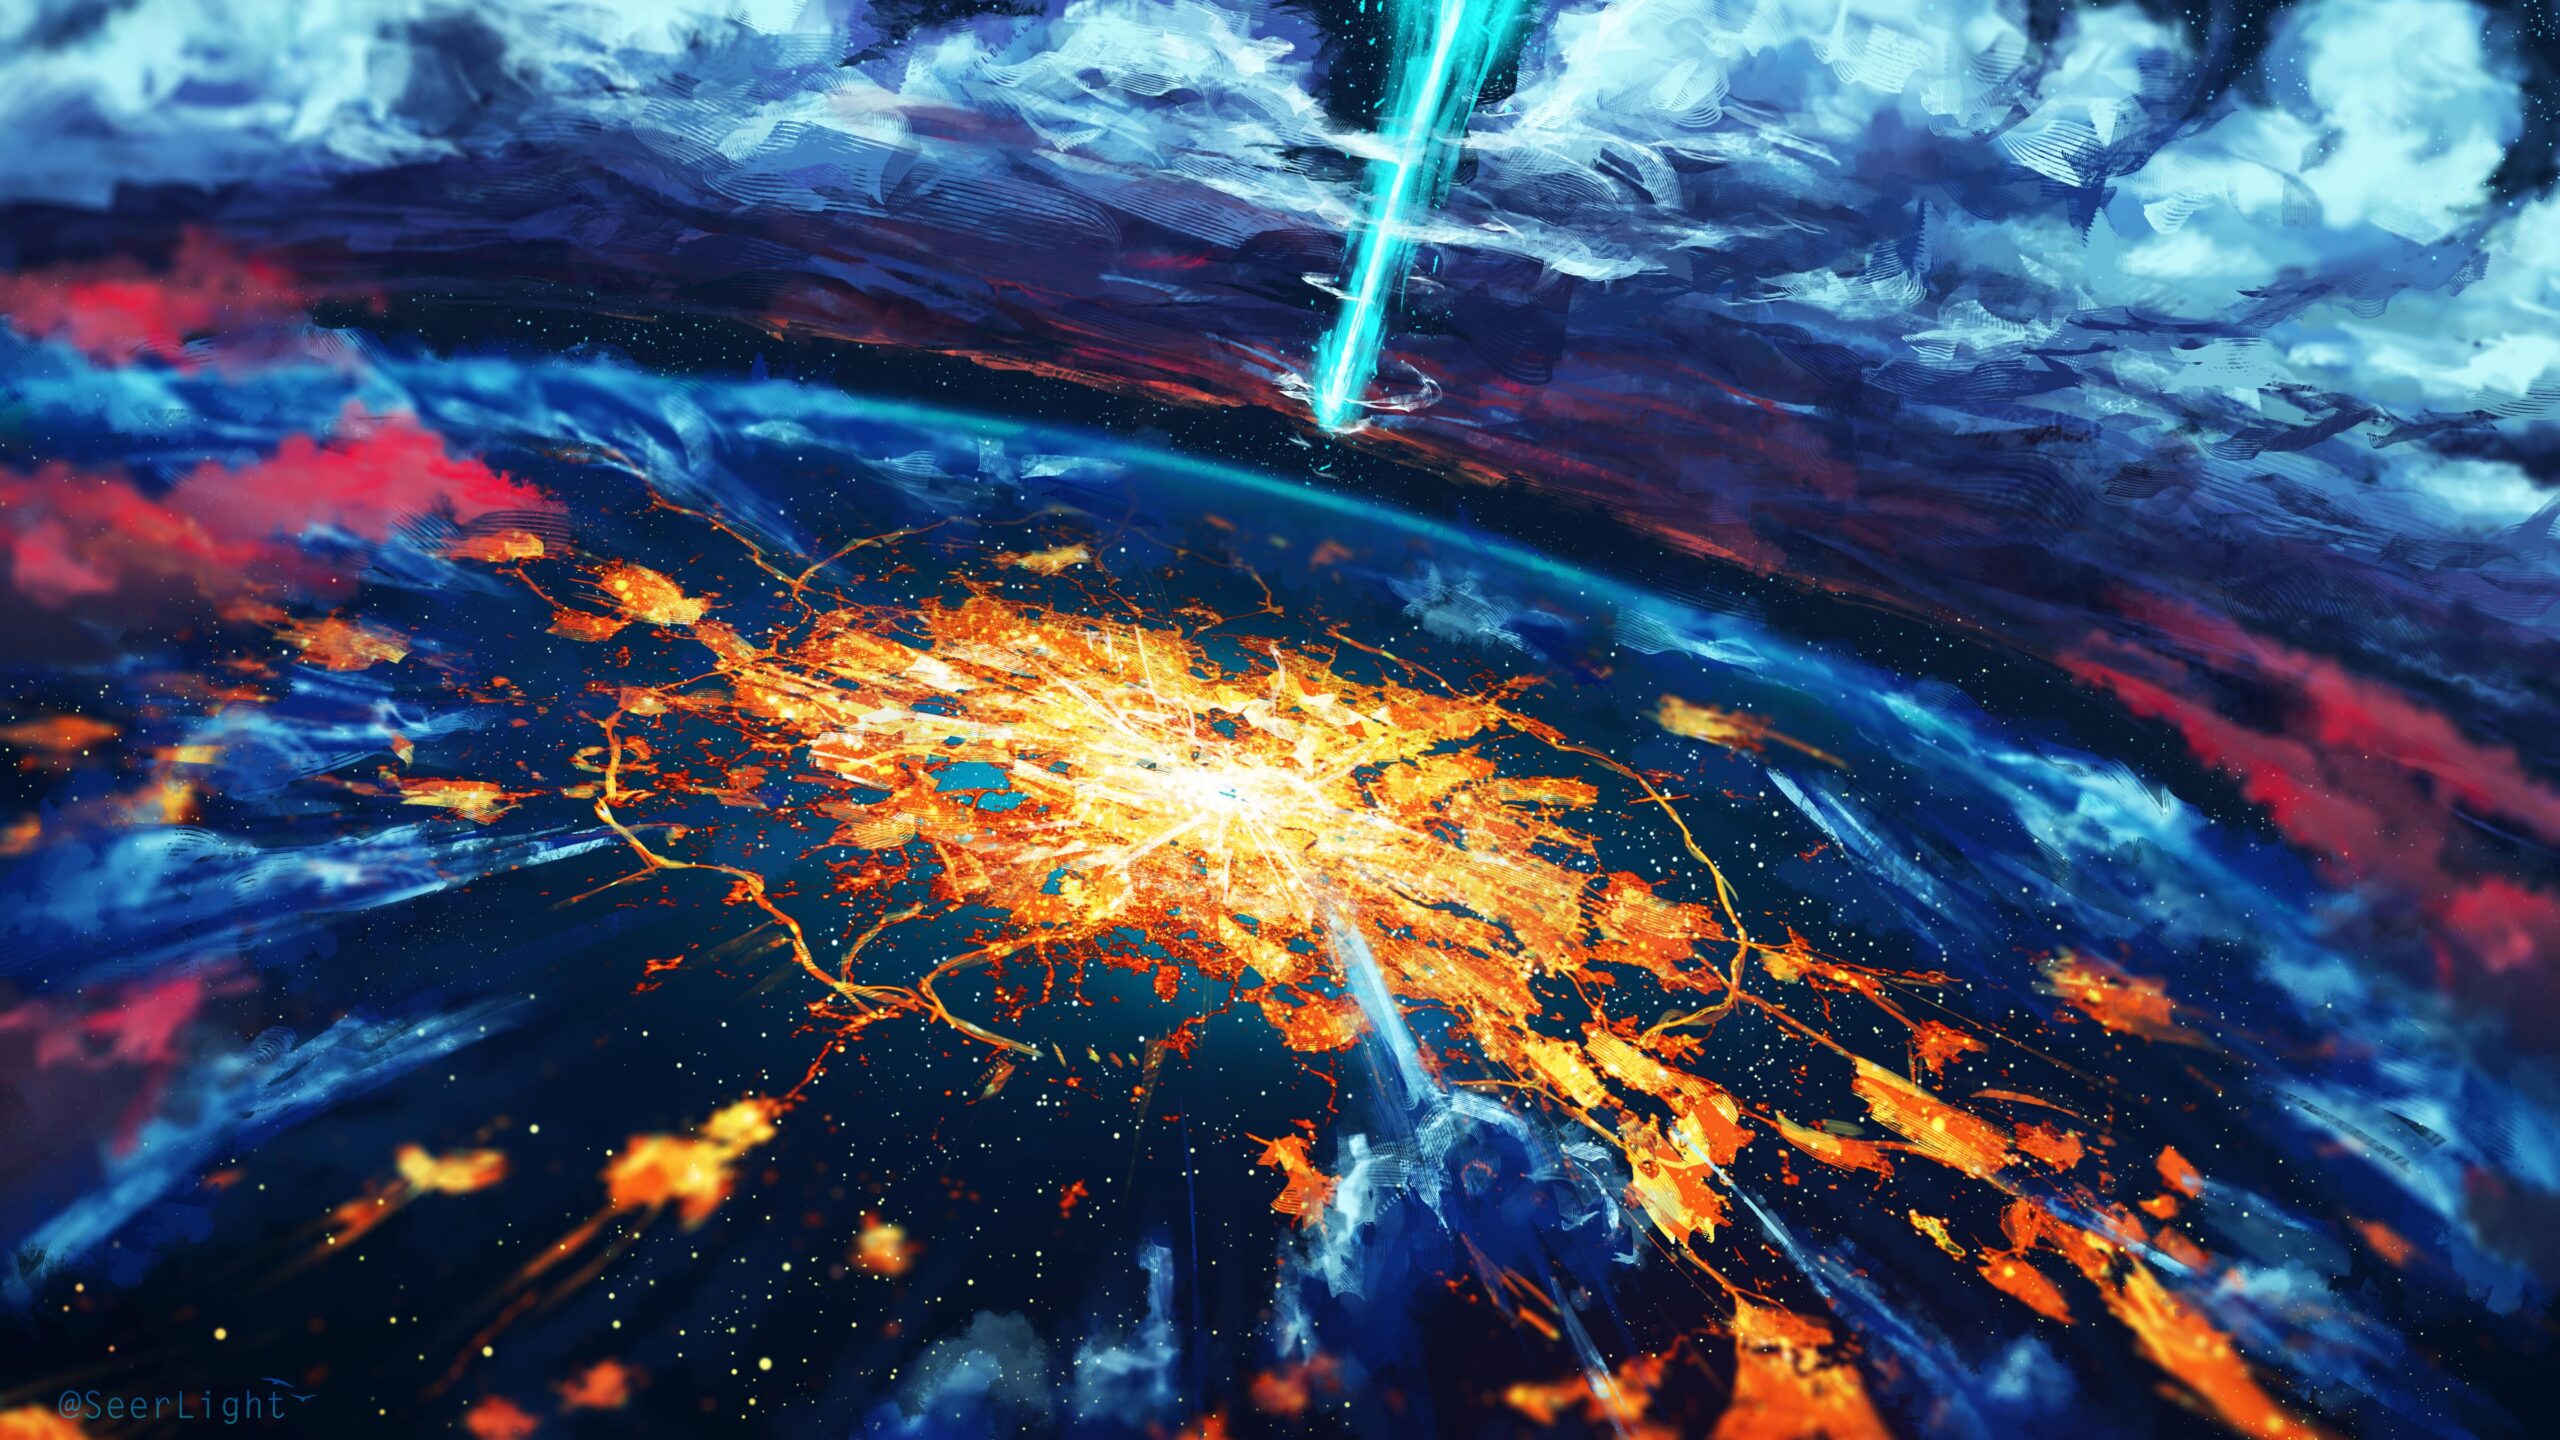 Apocalypse Cosmos Disaster Explosion World, 2K Artist, k Wallpapers